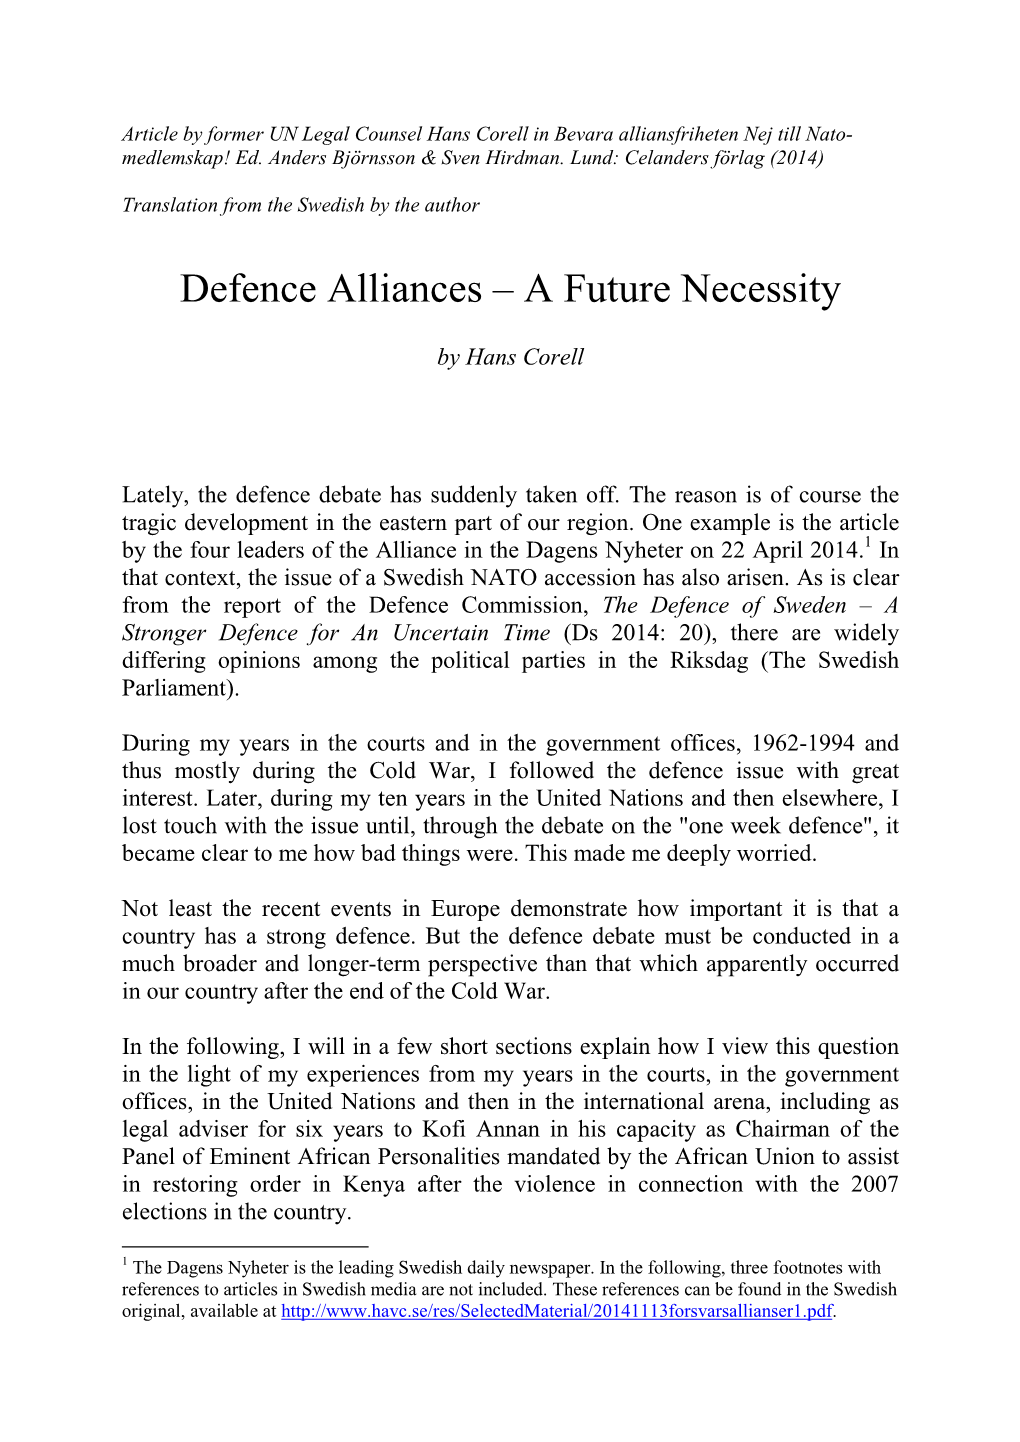 Defence Alliances – a Future Necessity